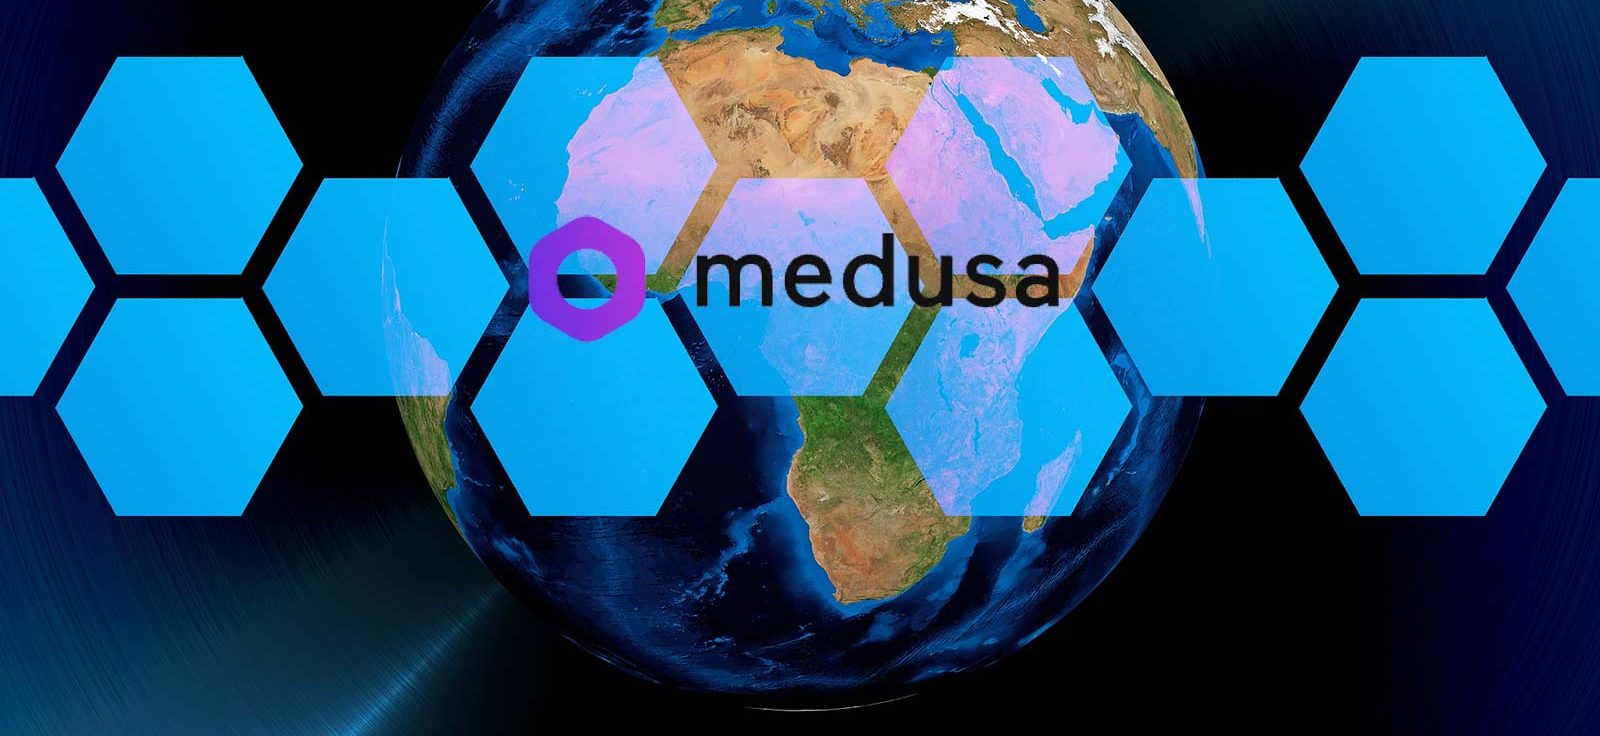 Medusa Is the Newest eCommerce Platform Making Waves 